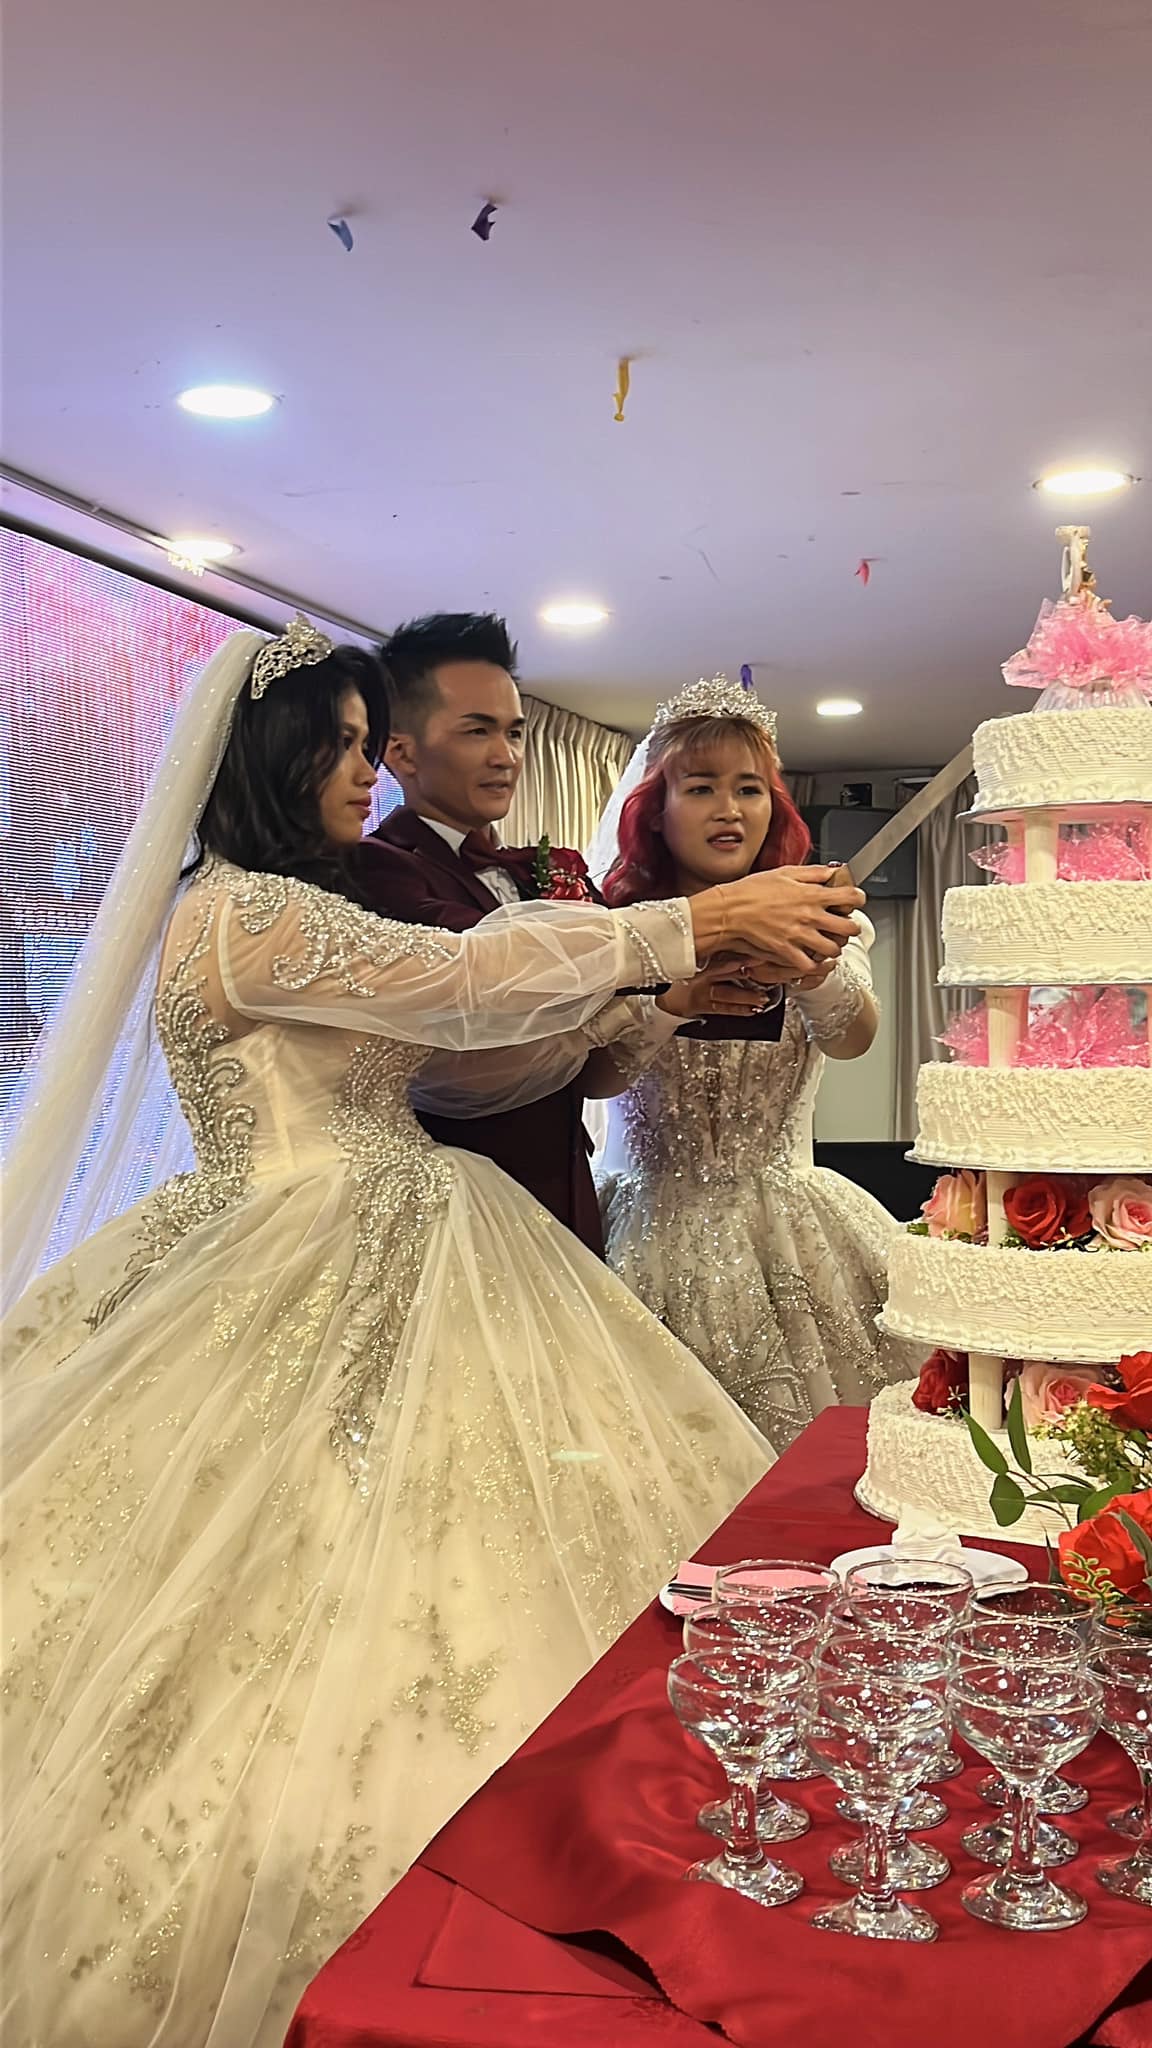 Sarawak man cuts wedding cake with his 2 wives